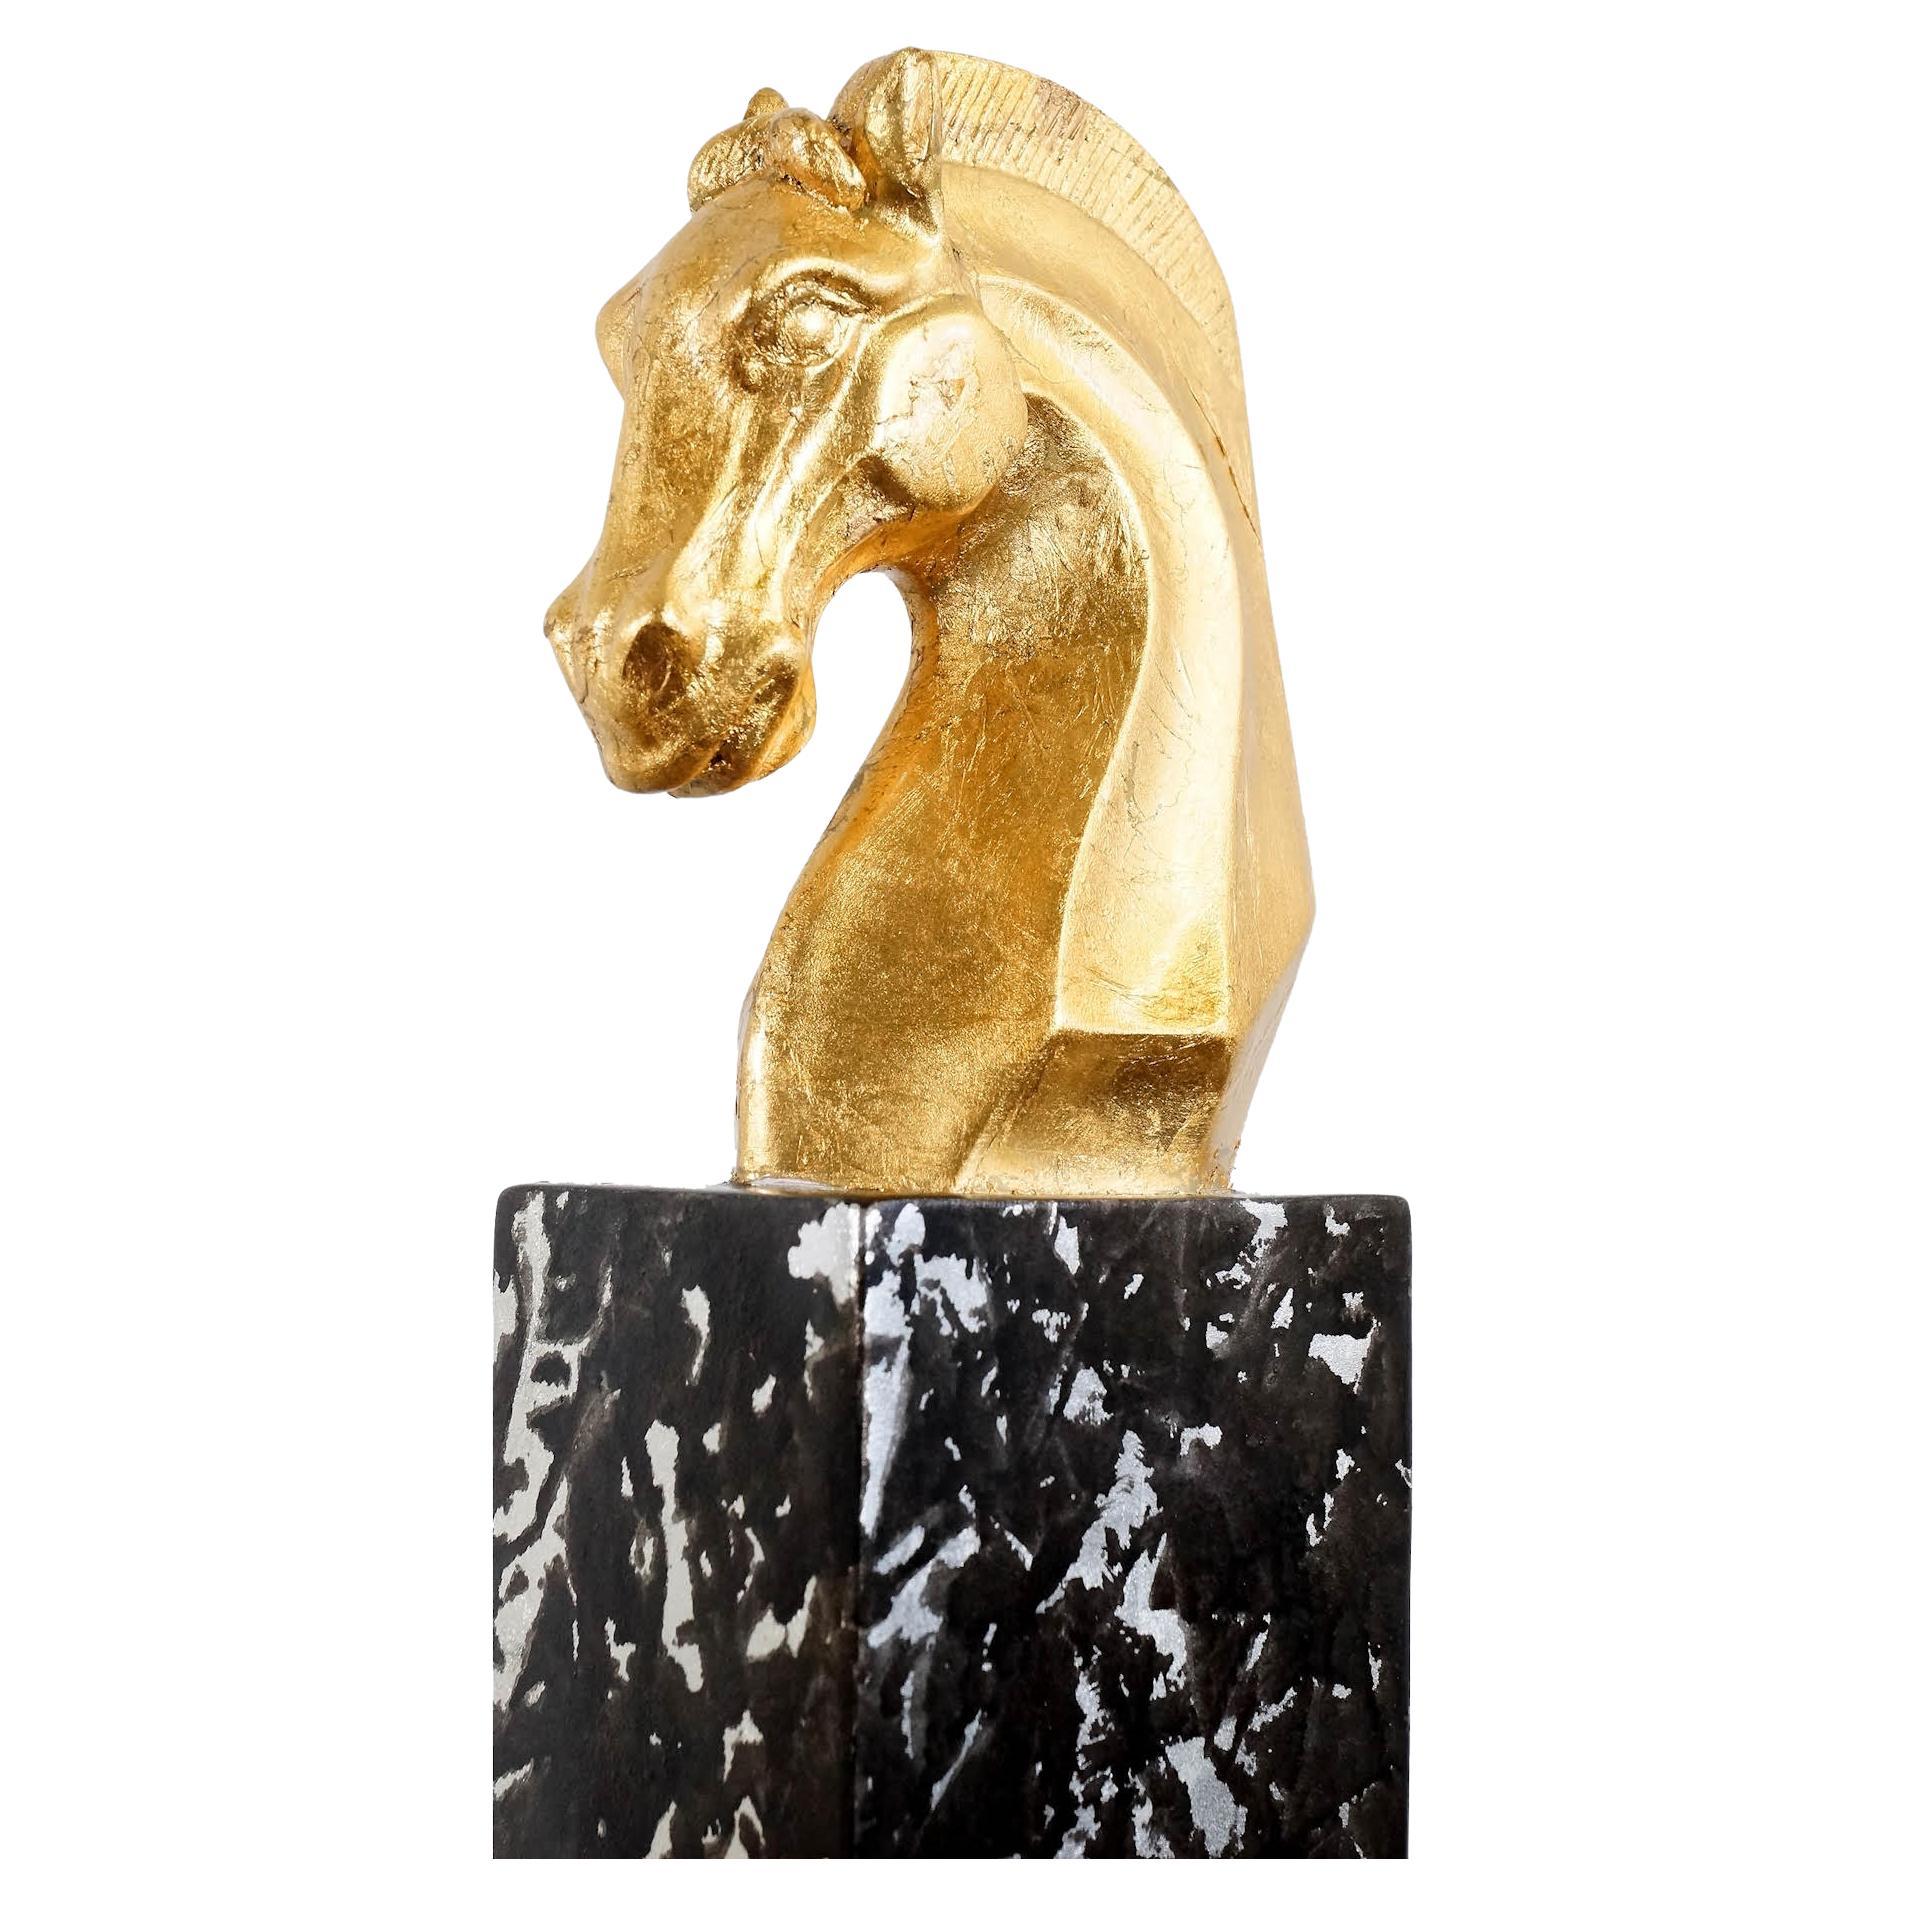 Gilded Fibreglass Horse Head Sculpture, Contemporary Work, XXIst Century. For Sale